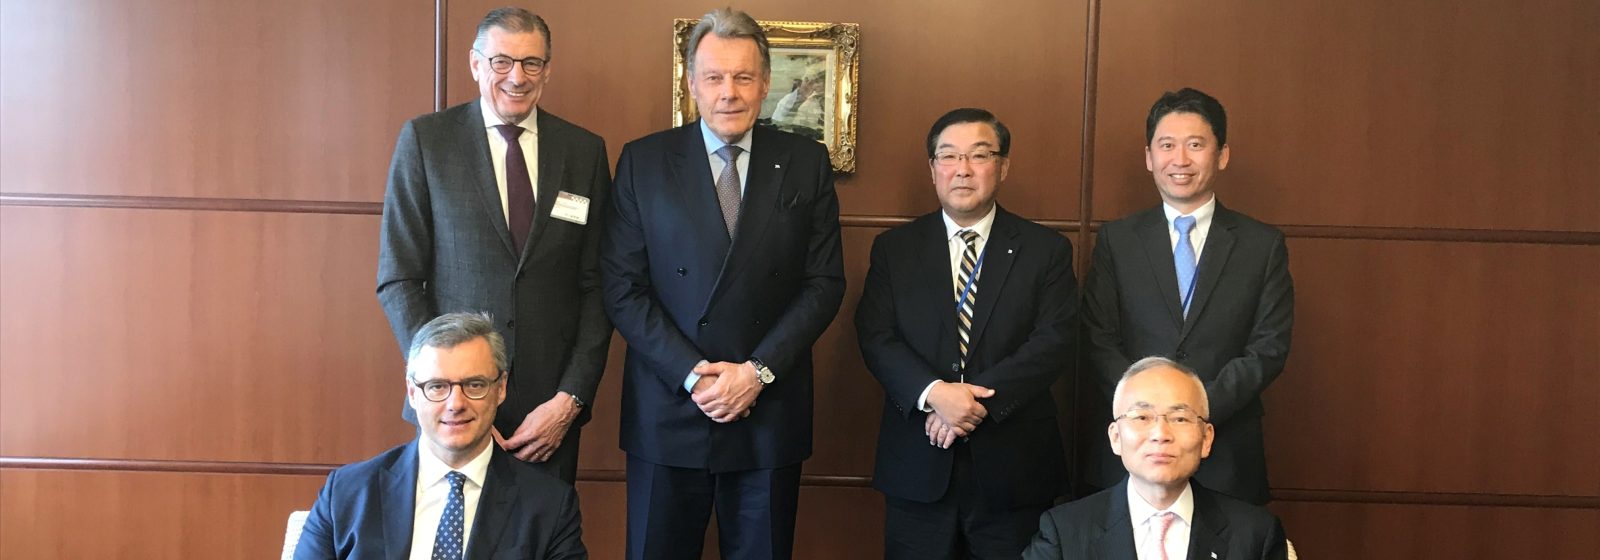 Ontvangst MBZ en ICO bij voorzitter NYK Tadaaki Naito in Tokio 2019